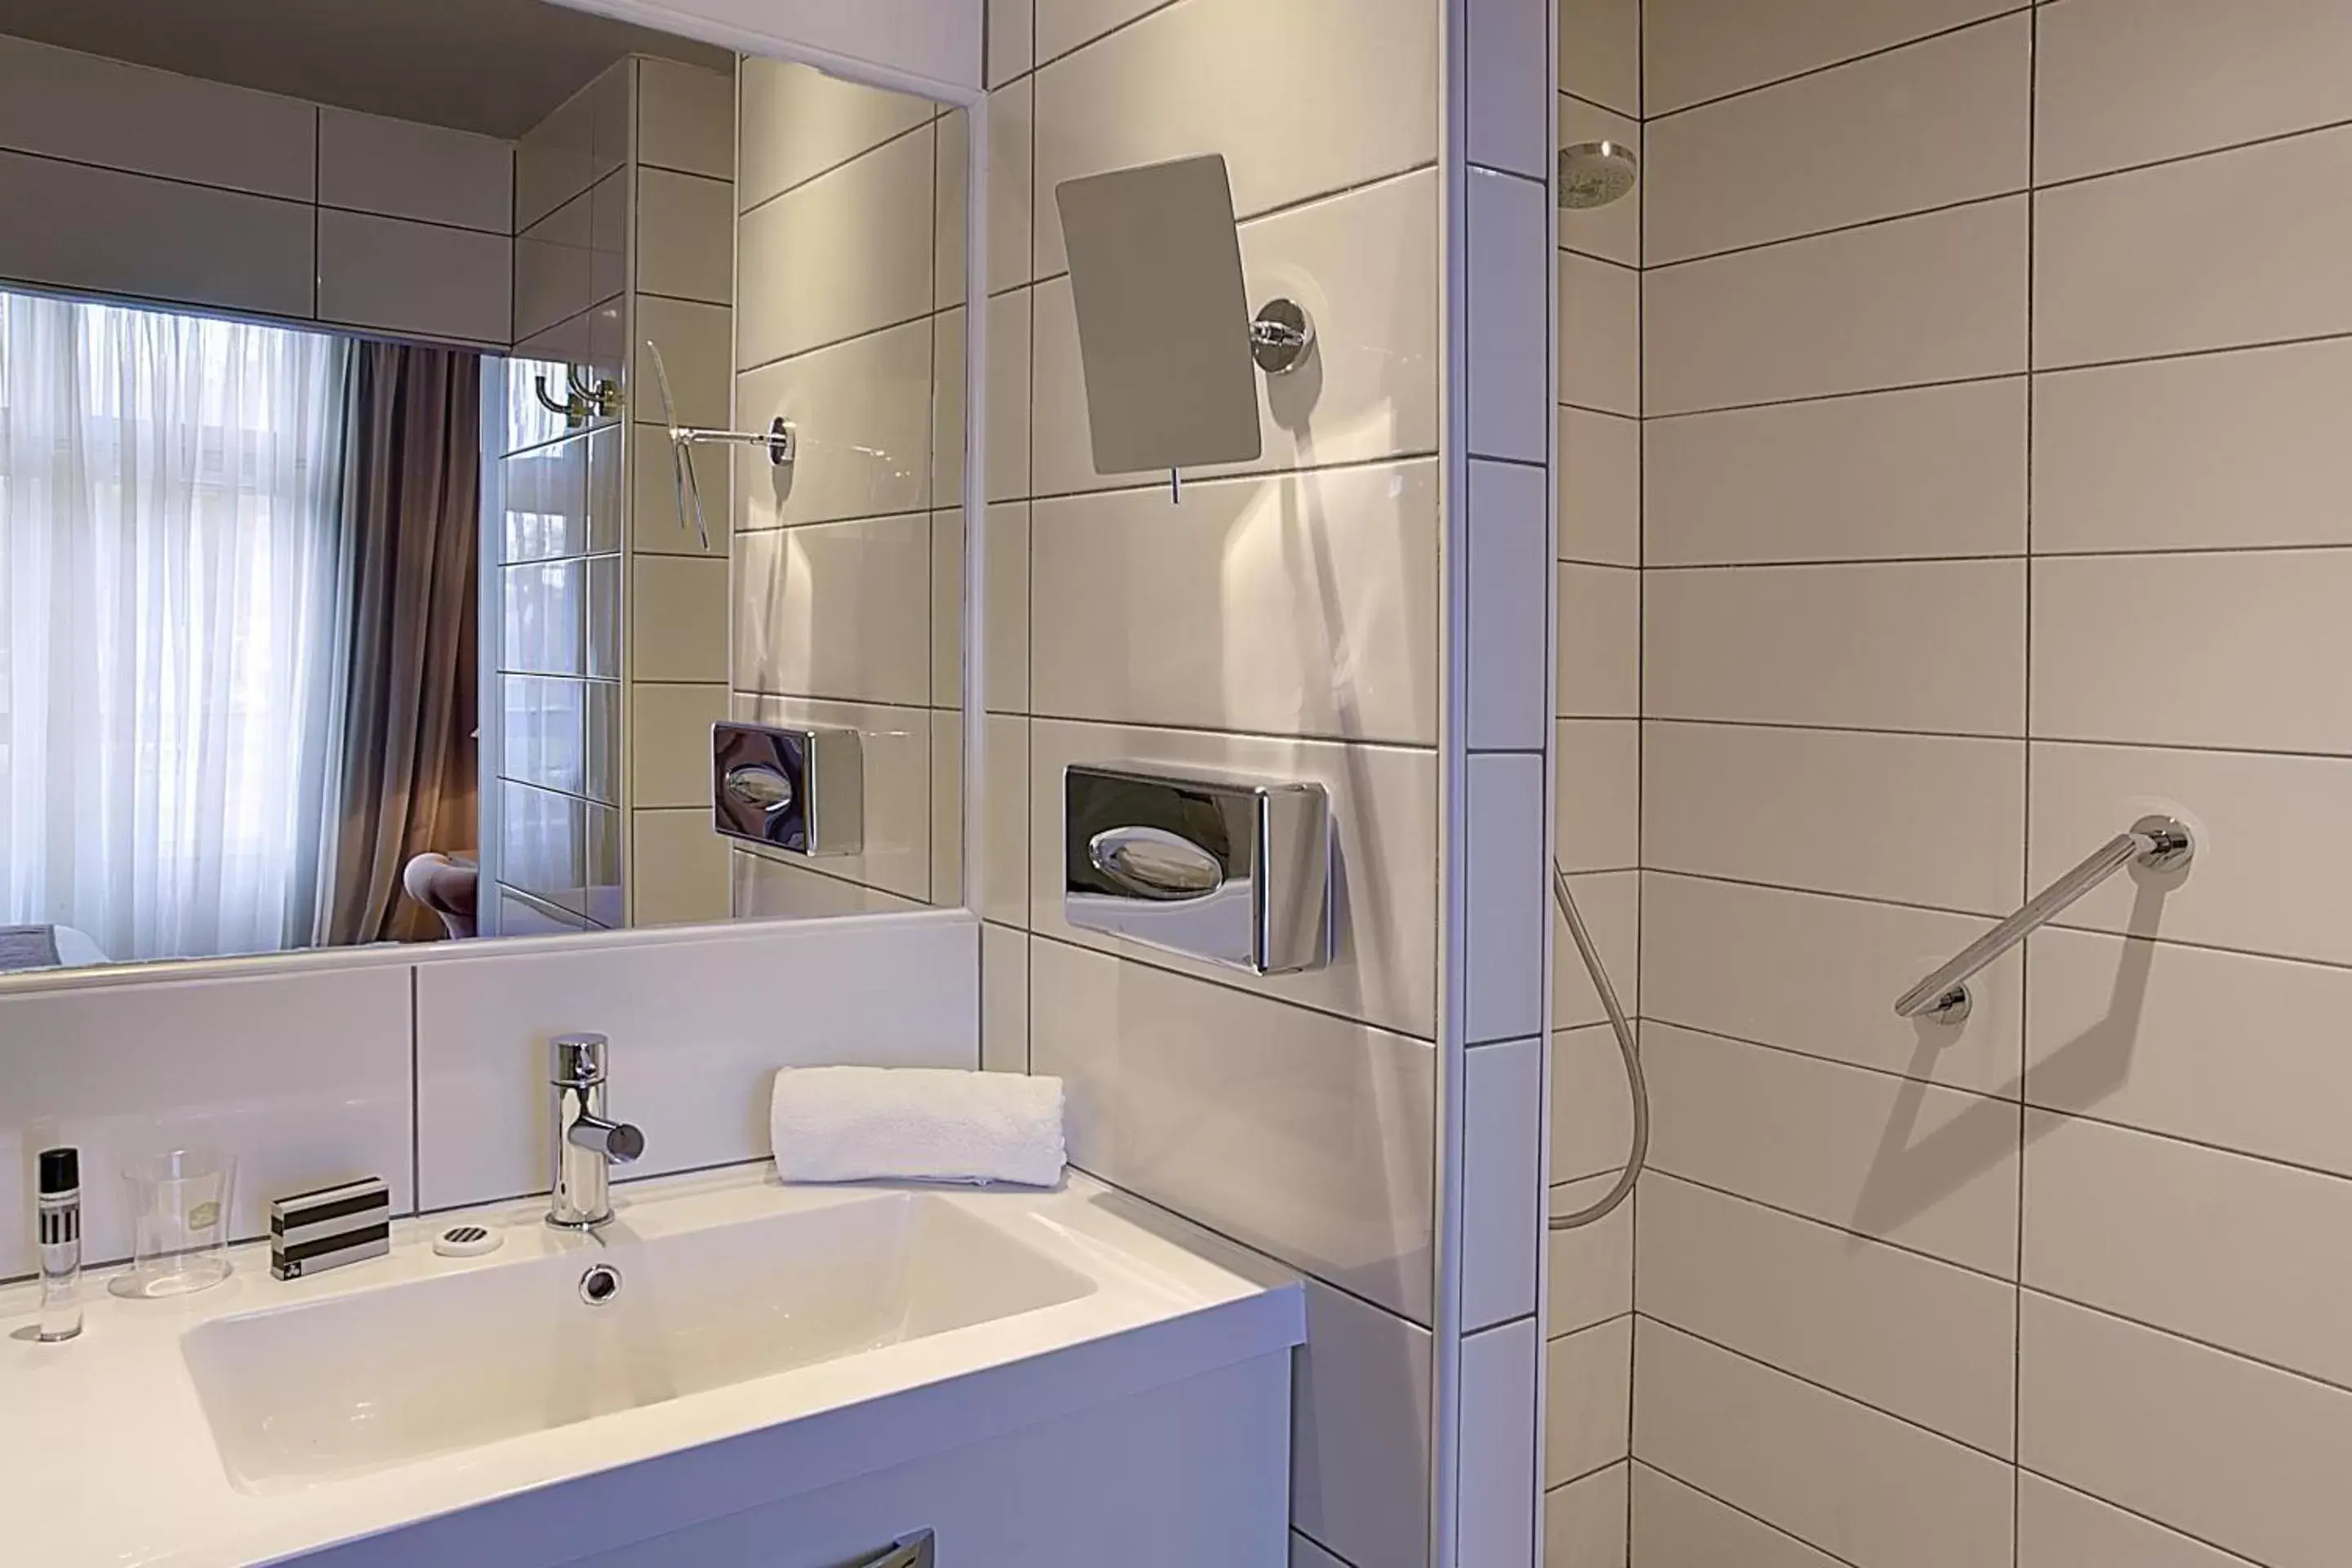 Photo of the whole room, Bathroom in Best Western Hotel de la Breche